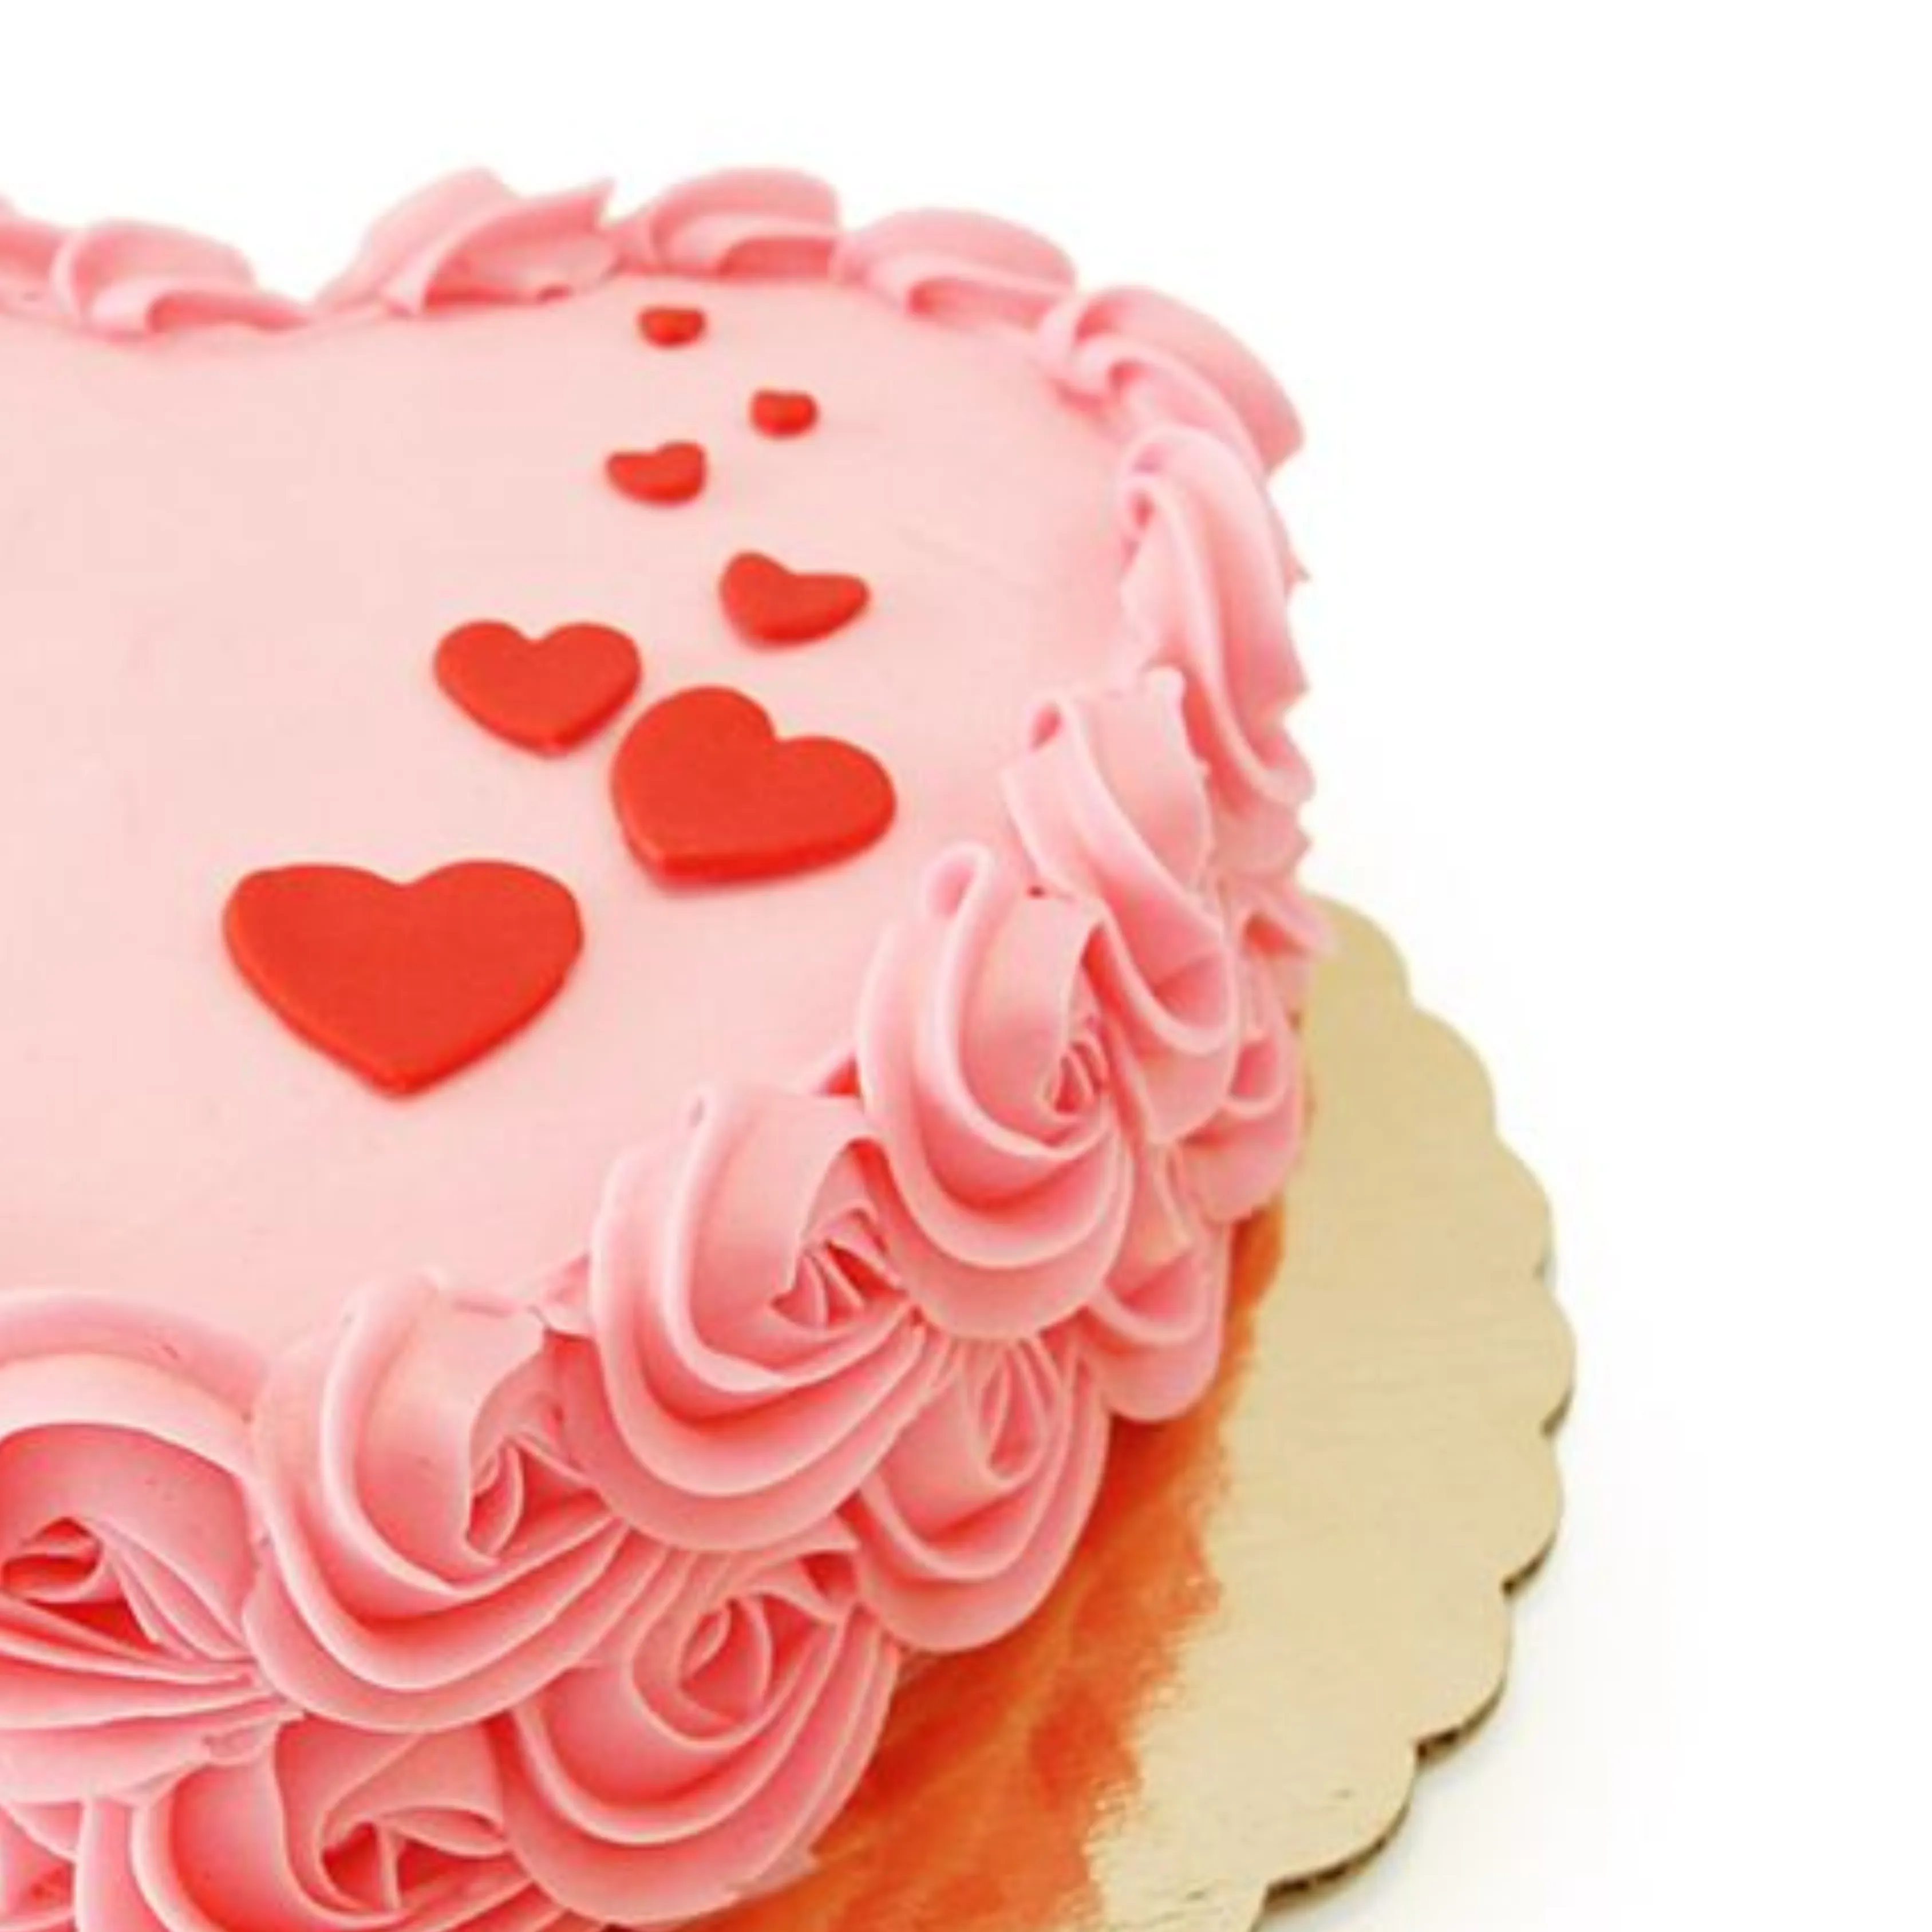 Yummy Strawberry Heart Shape Cake